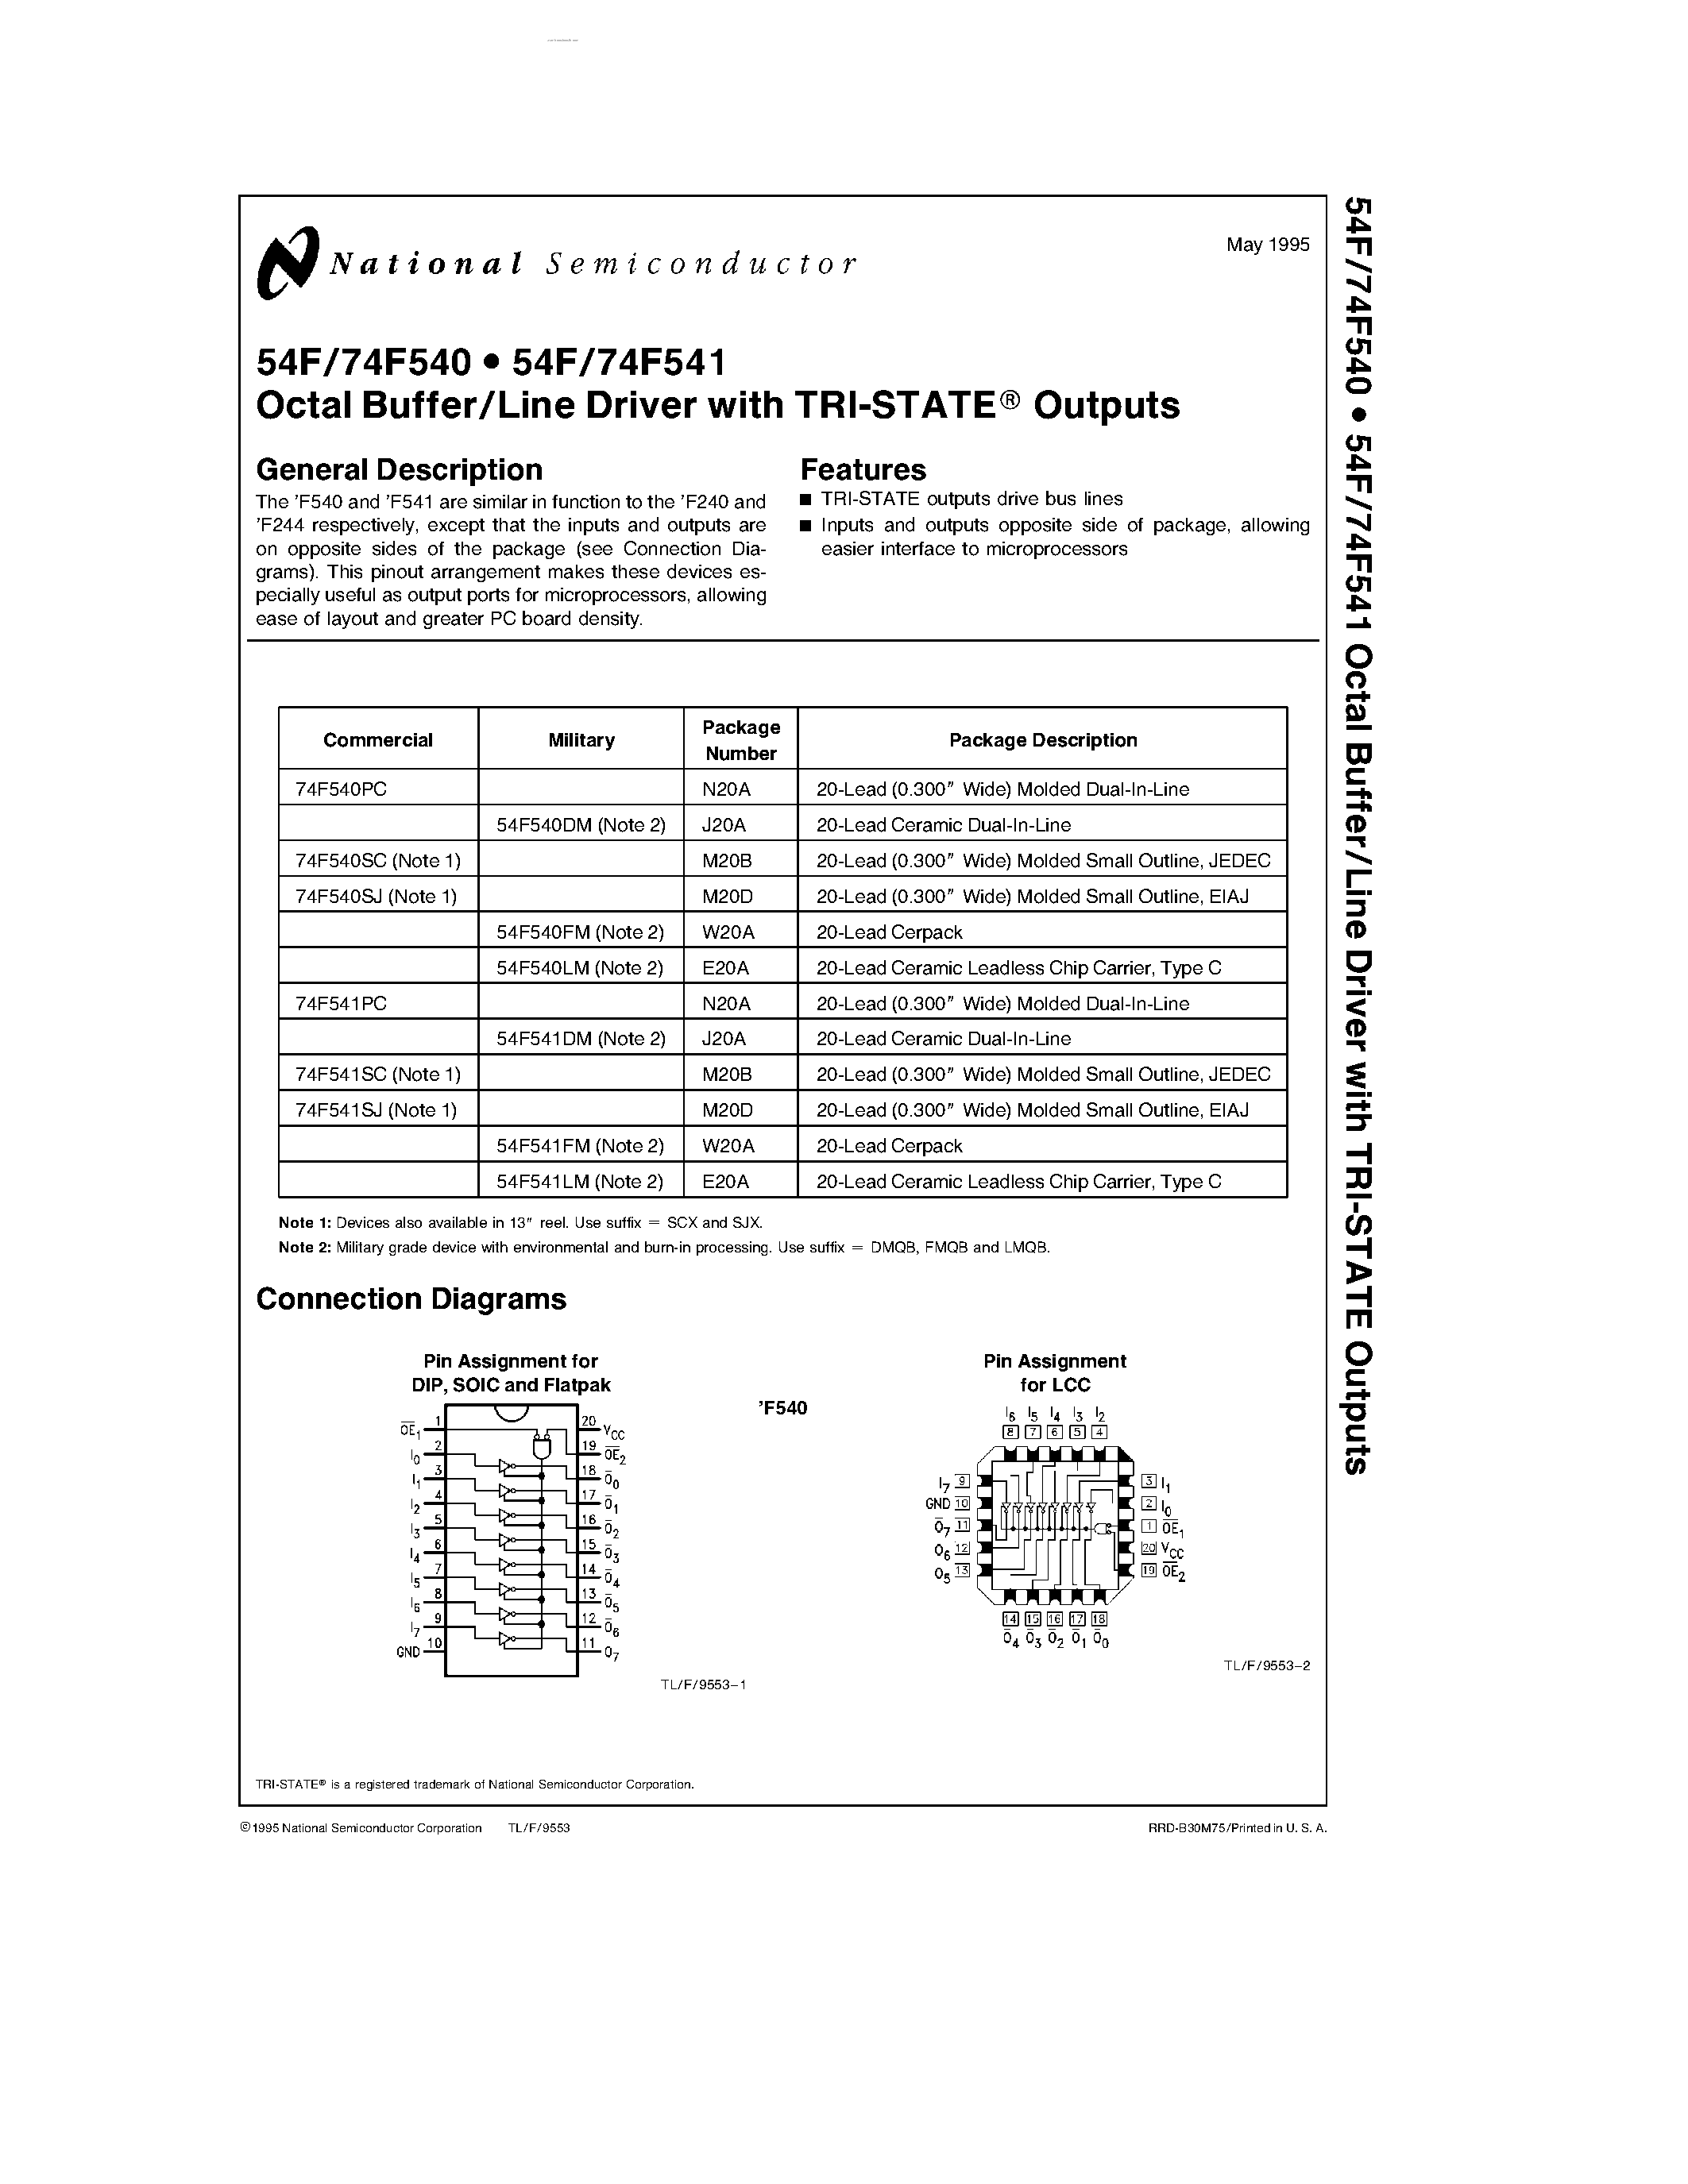 Datasheet 54F540 - (54F540 / 54F541) Octal Buffer/Line Driver page 1